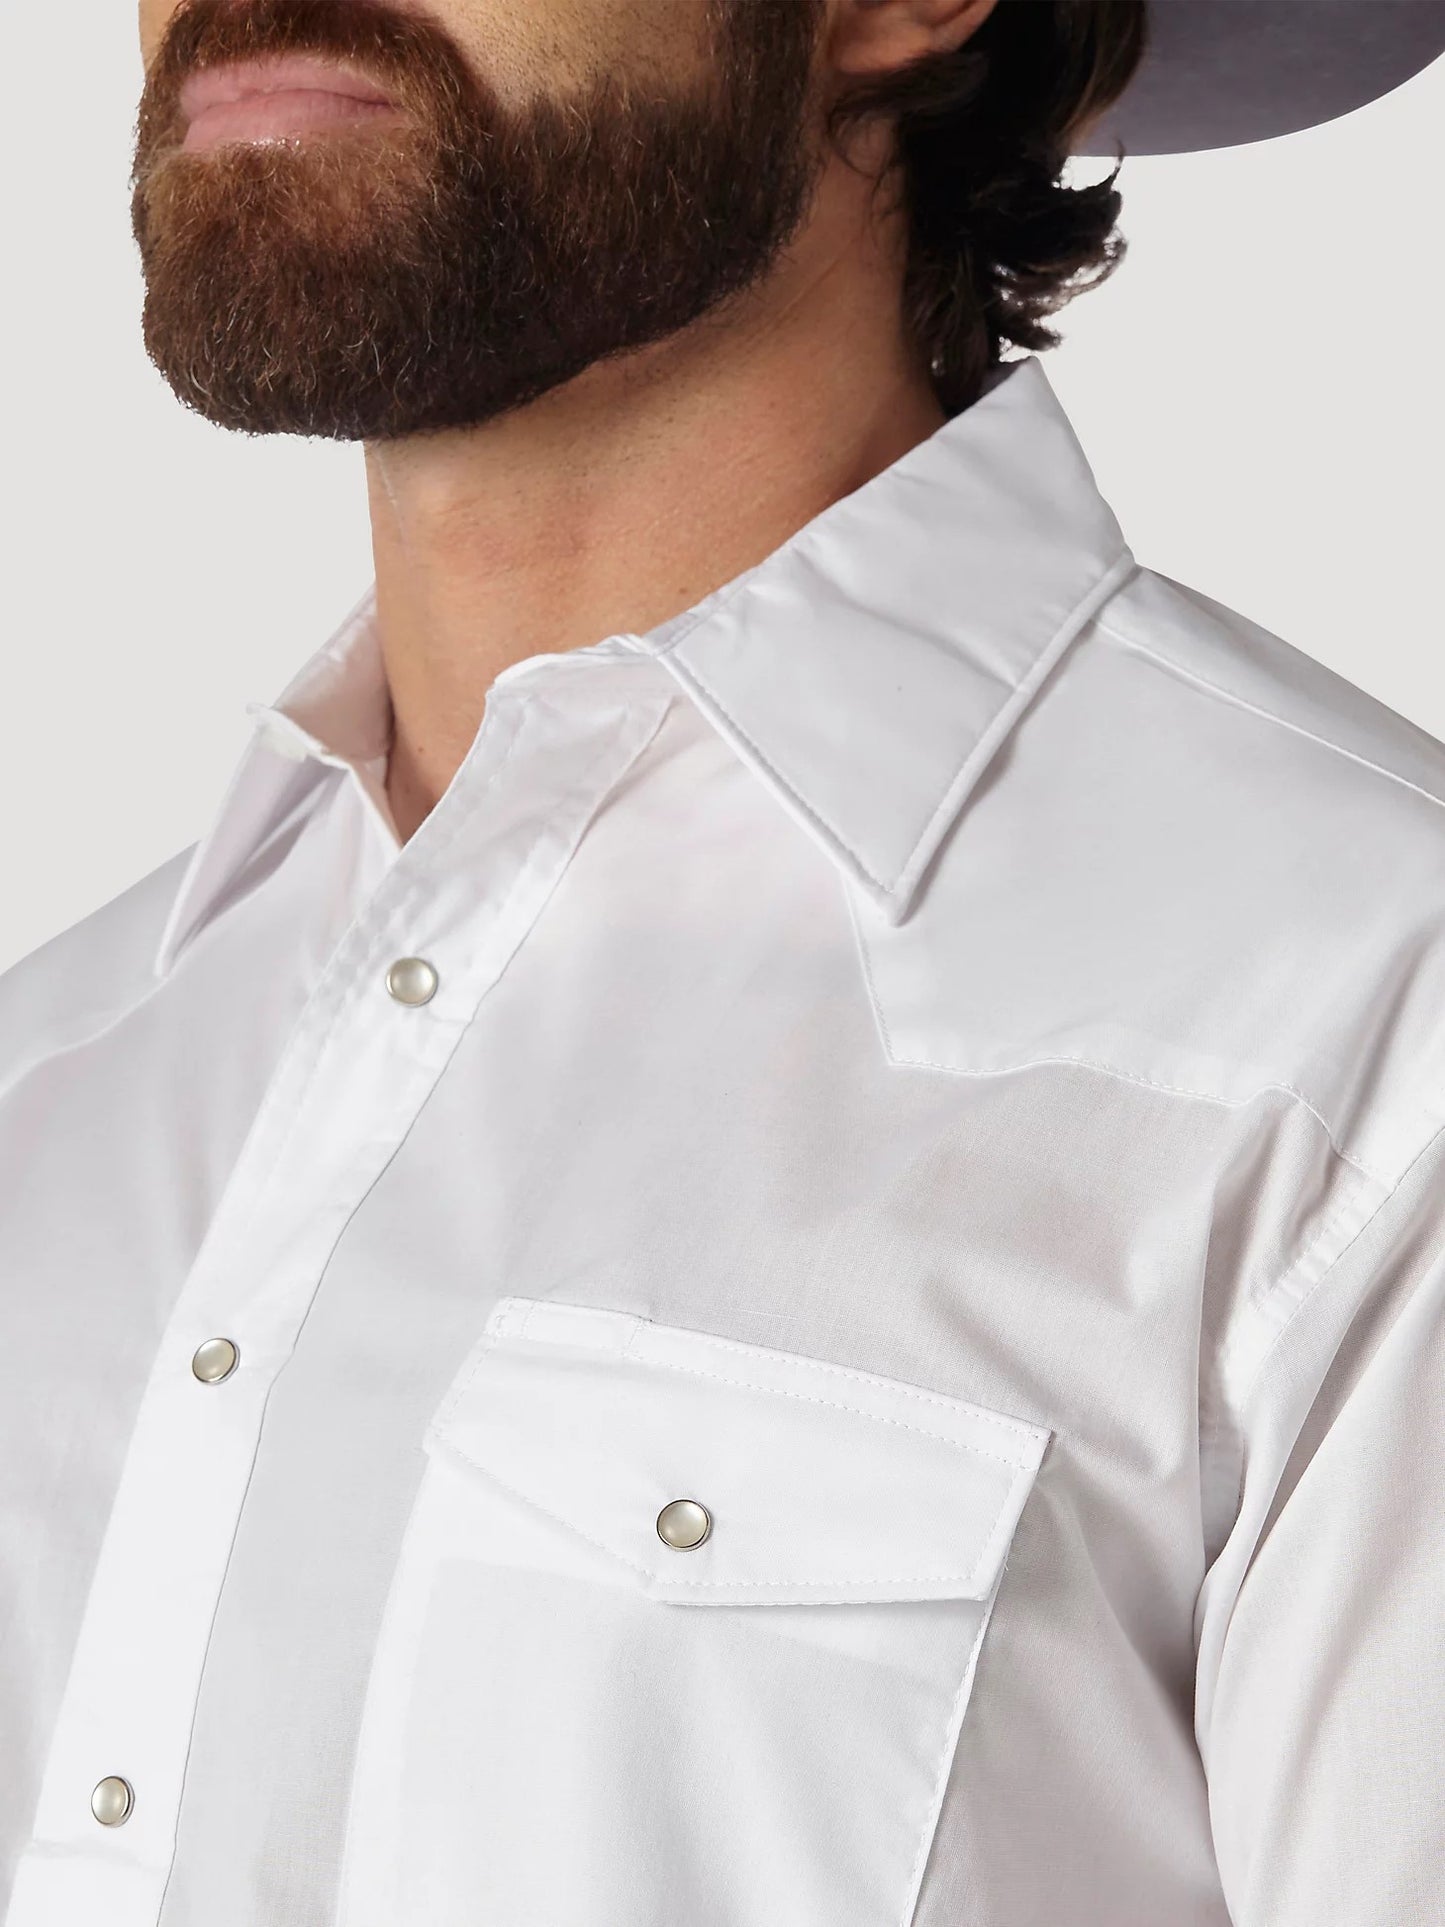 The Wrangler White Button up Long Sleeve Shirt